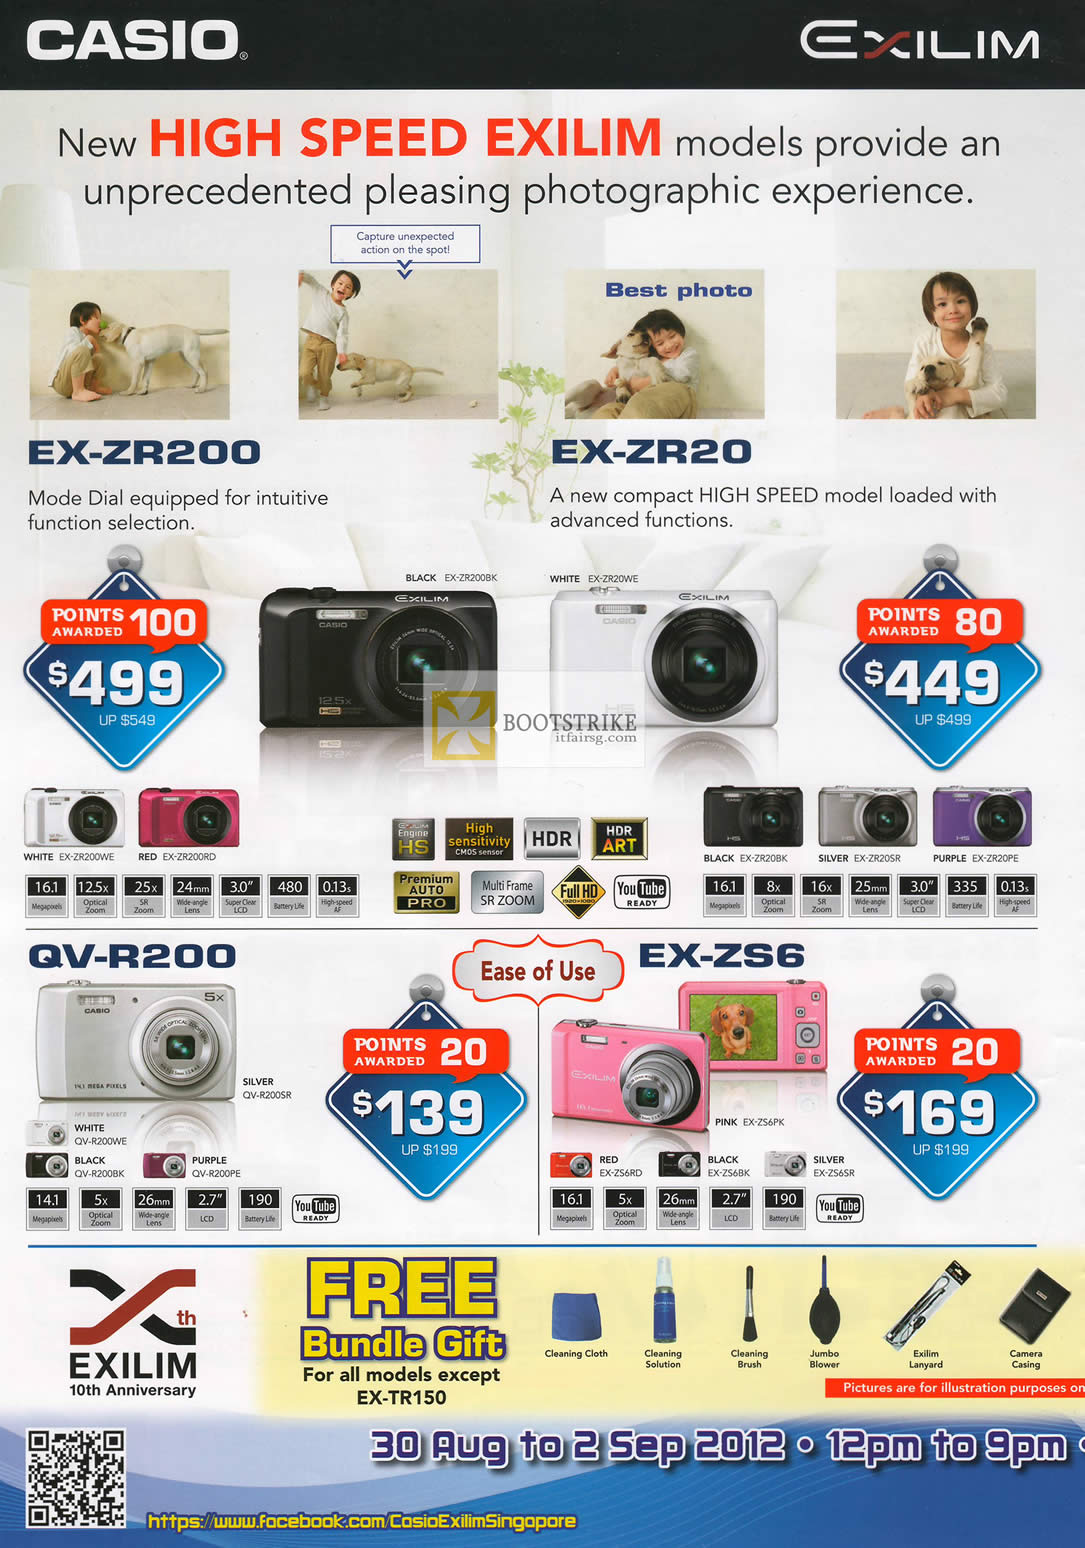 COMEX 2012 price list image brochure of Casio Digital Cameras Exilim EX-ZR200, EX-ZR20, QV-R200, EX-ZS6